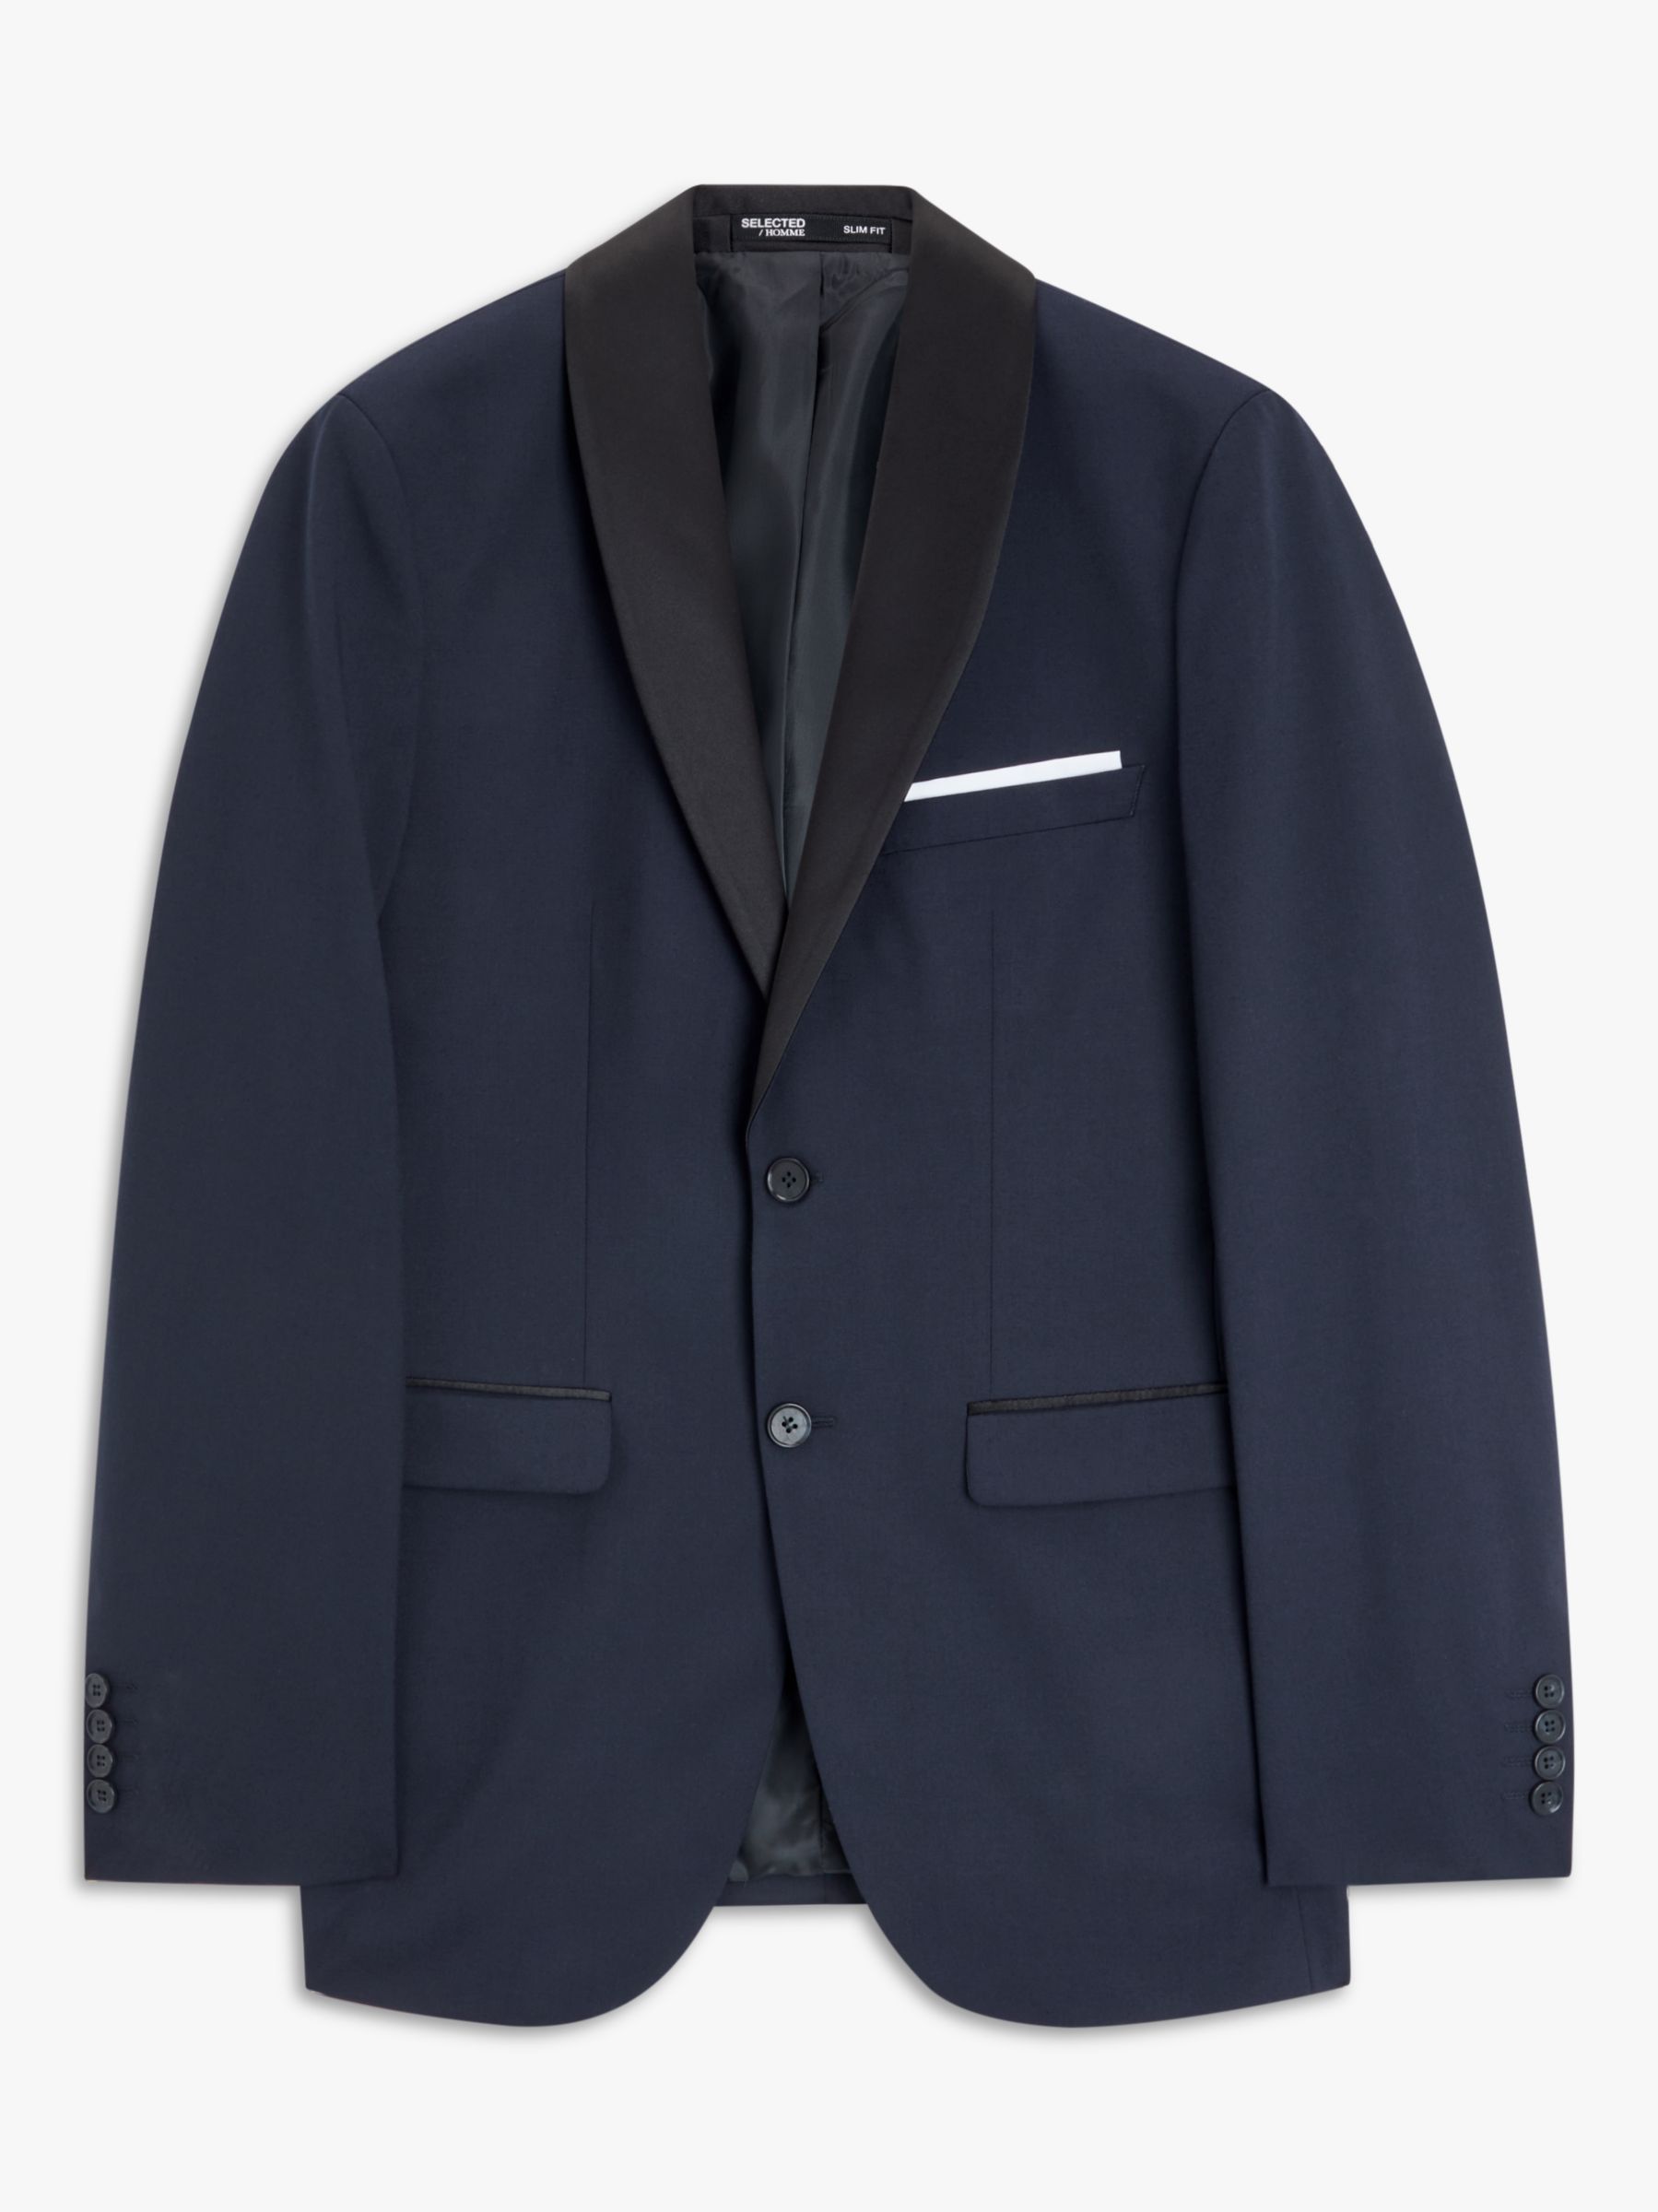 SELECTED HOMME Slim Fit Shawl Tuxedo Jacket, Navy Blazer, 36R